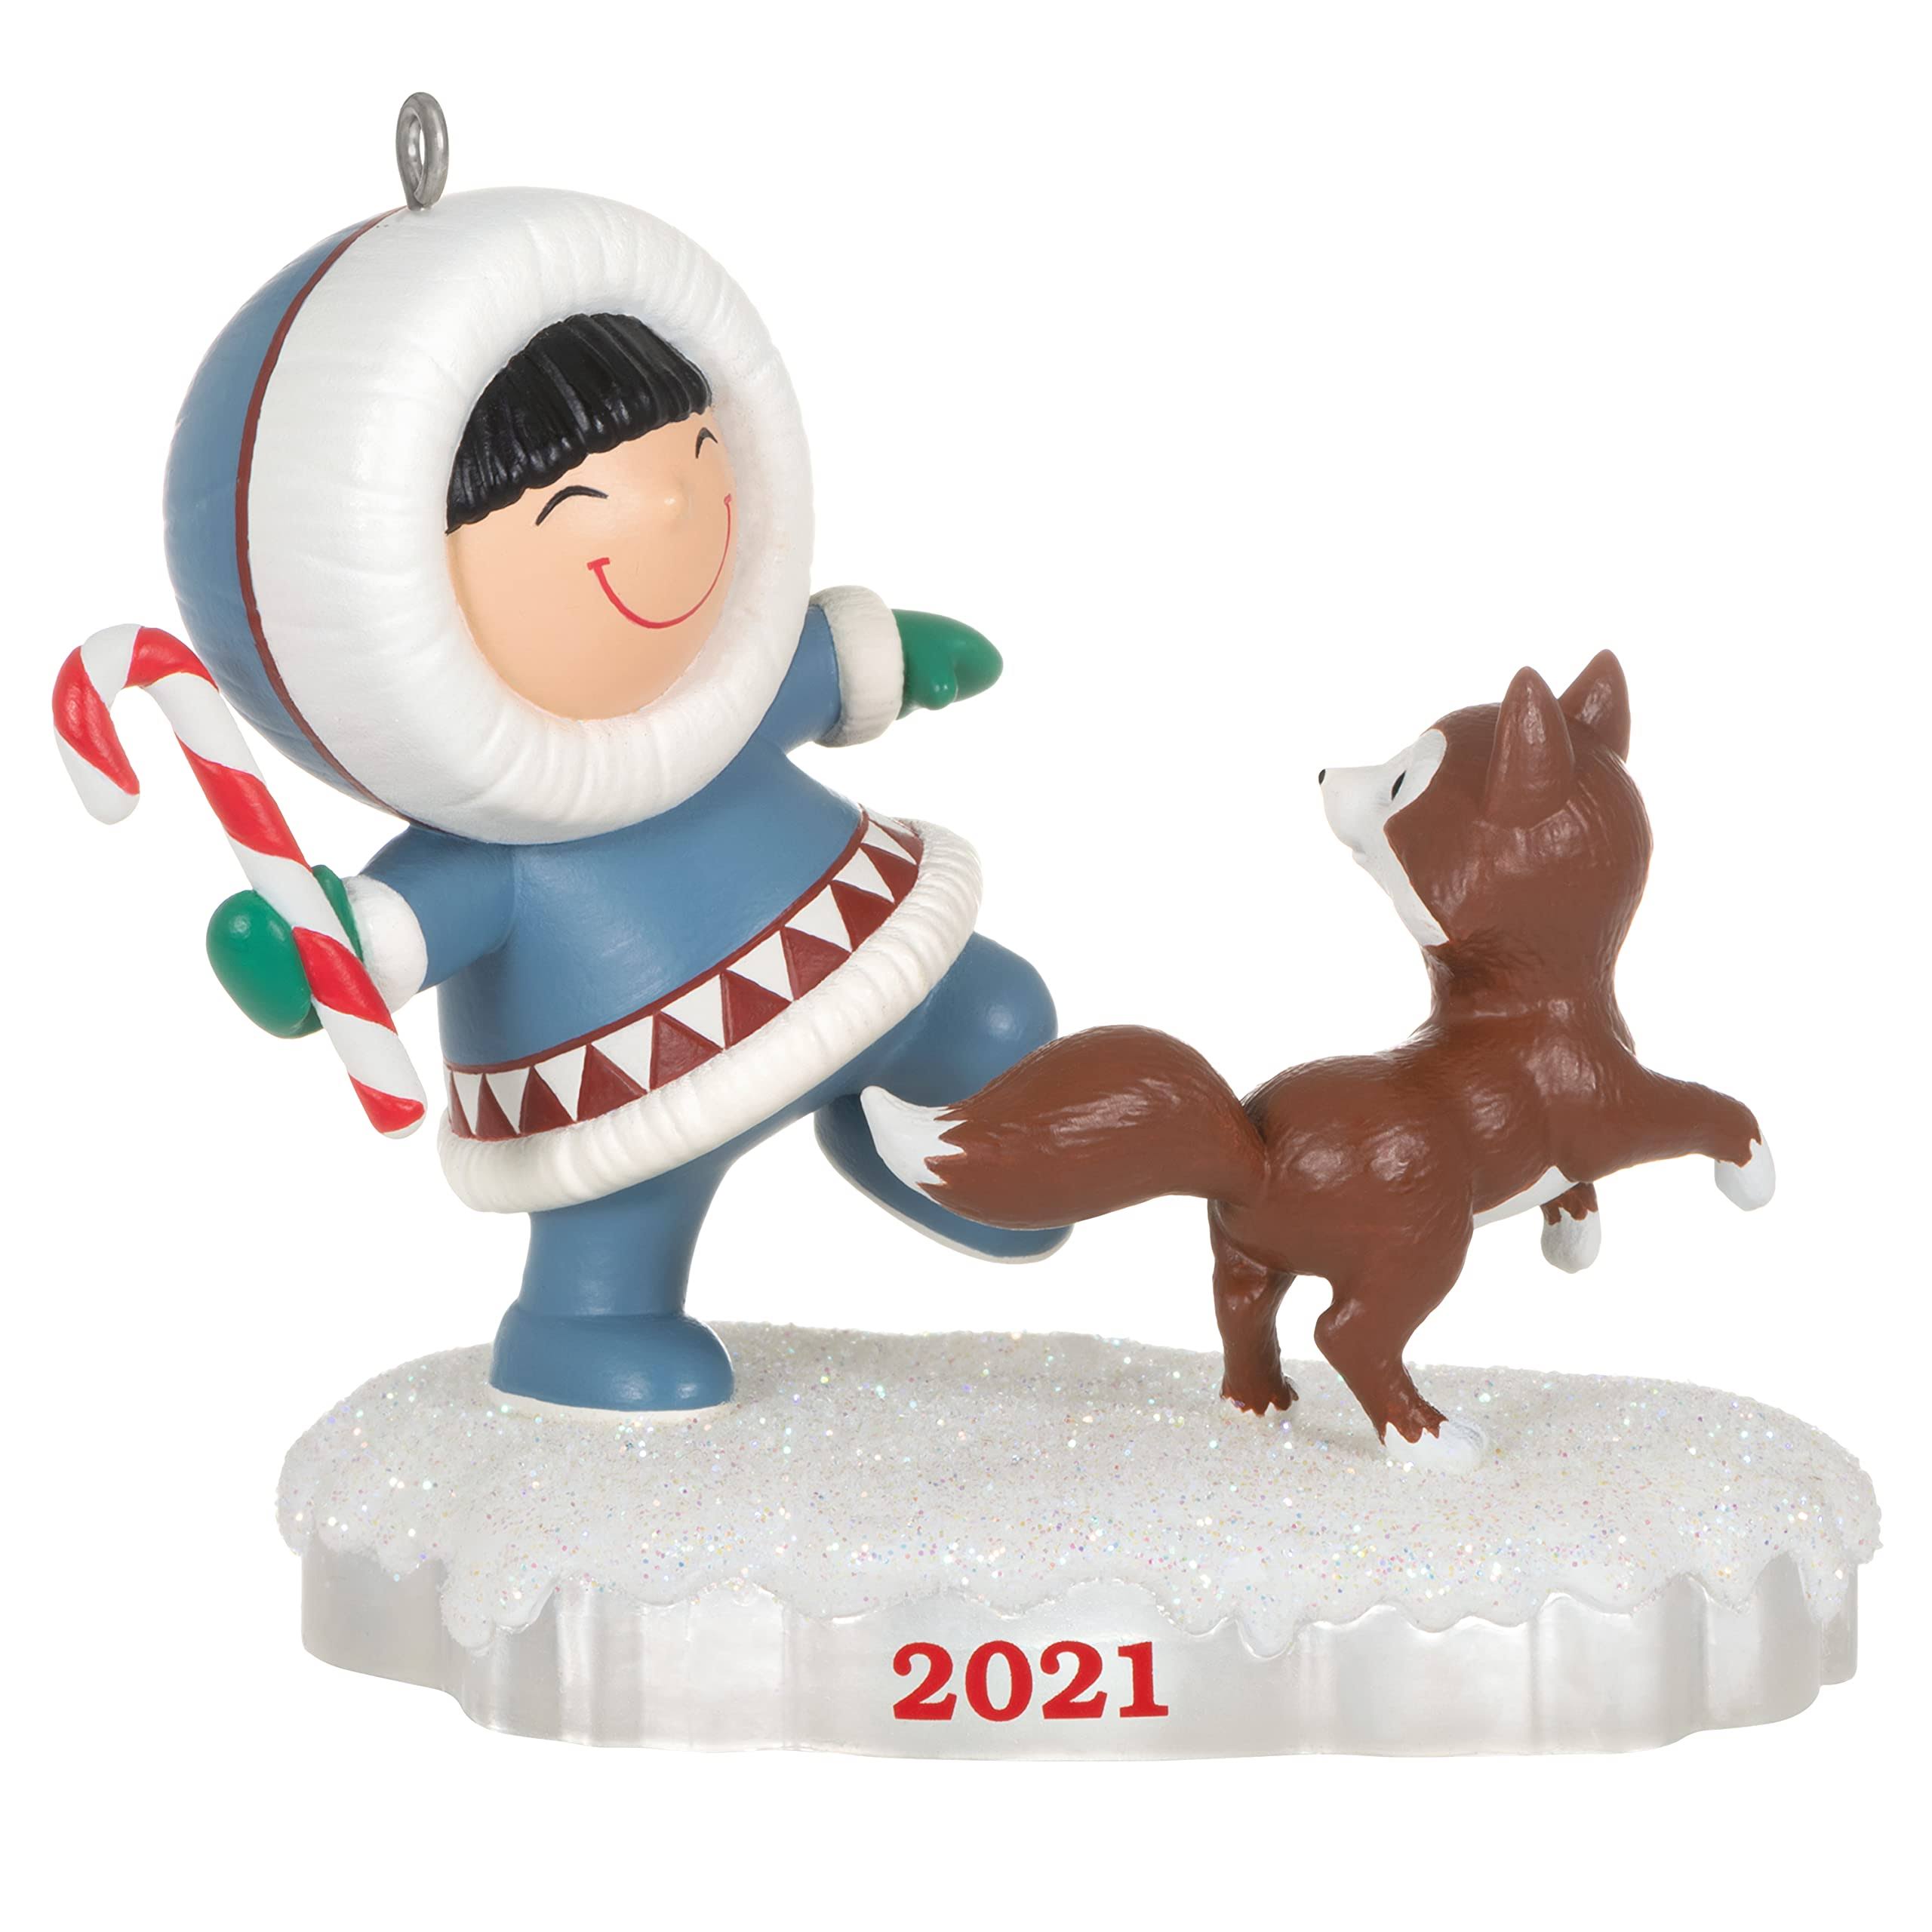 Hallmark Keepsake Christmas Ornament, Year Dated 2021, Frosty Friends